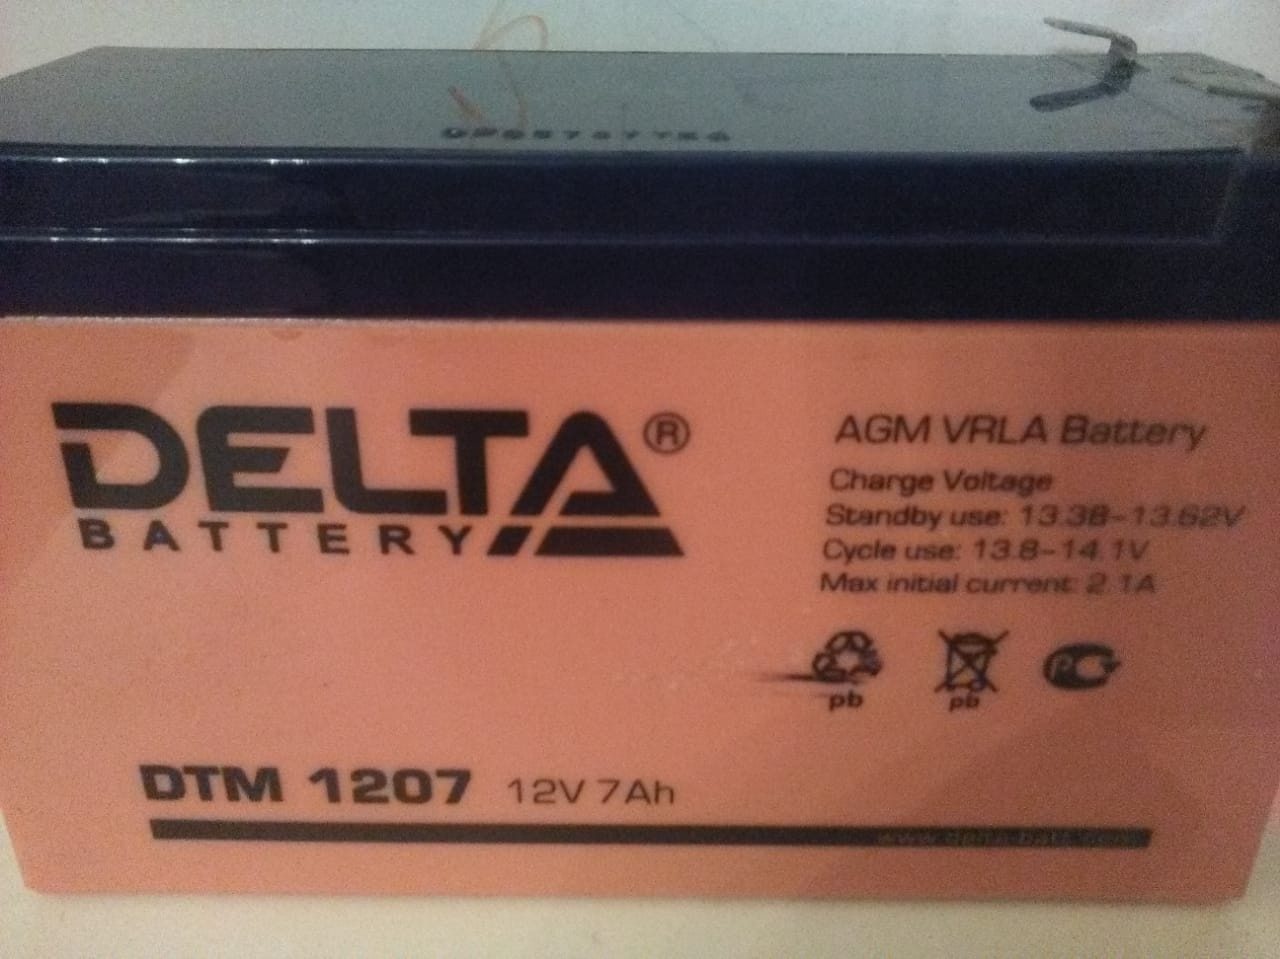 Аккумулятор 12v 2.0 ah. Аккумуляторная батарея Delta DT 12100 (12v / 100ah). Дельта аккумулятор 12v 7ah. Батарея Delta DT 1207 (12v, 7ah) <DT 1207>. Delta DTM 1207 12v.